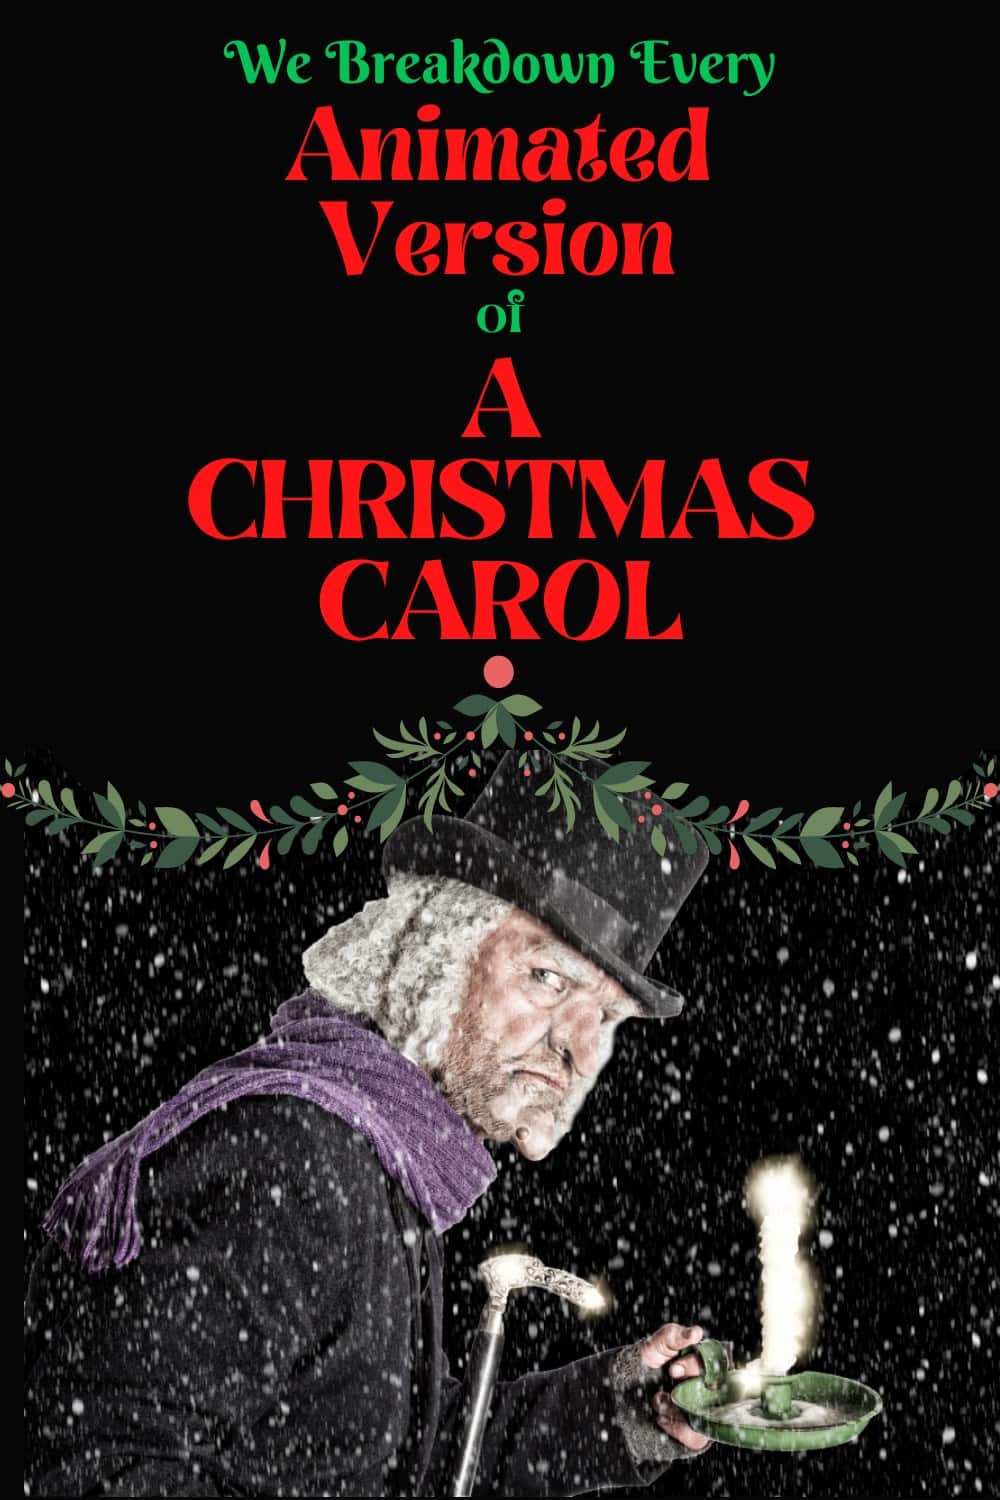 Cartoon Versions of A Christmas Carol